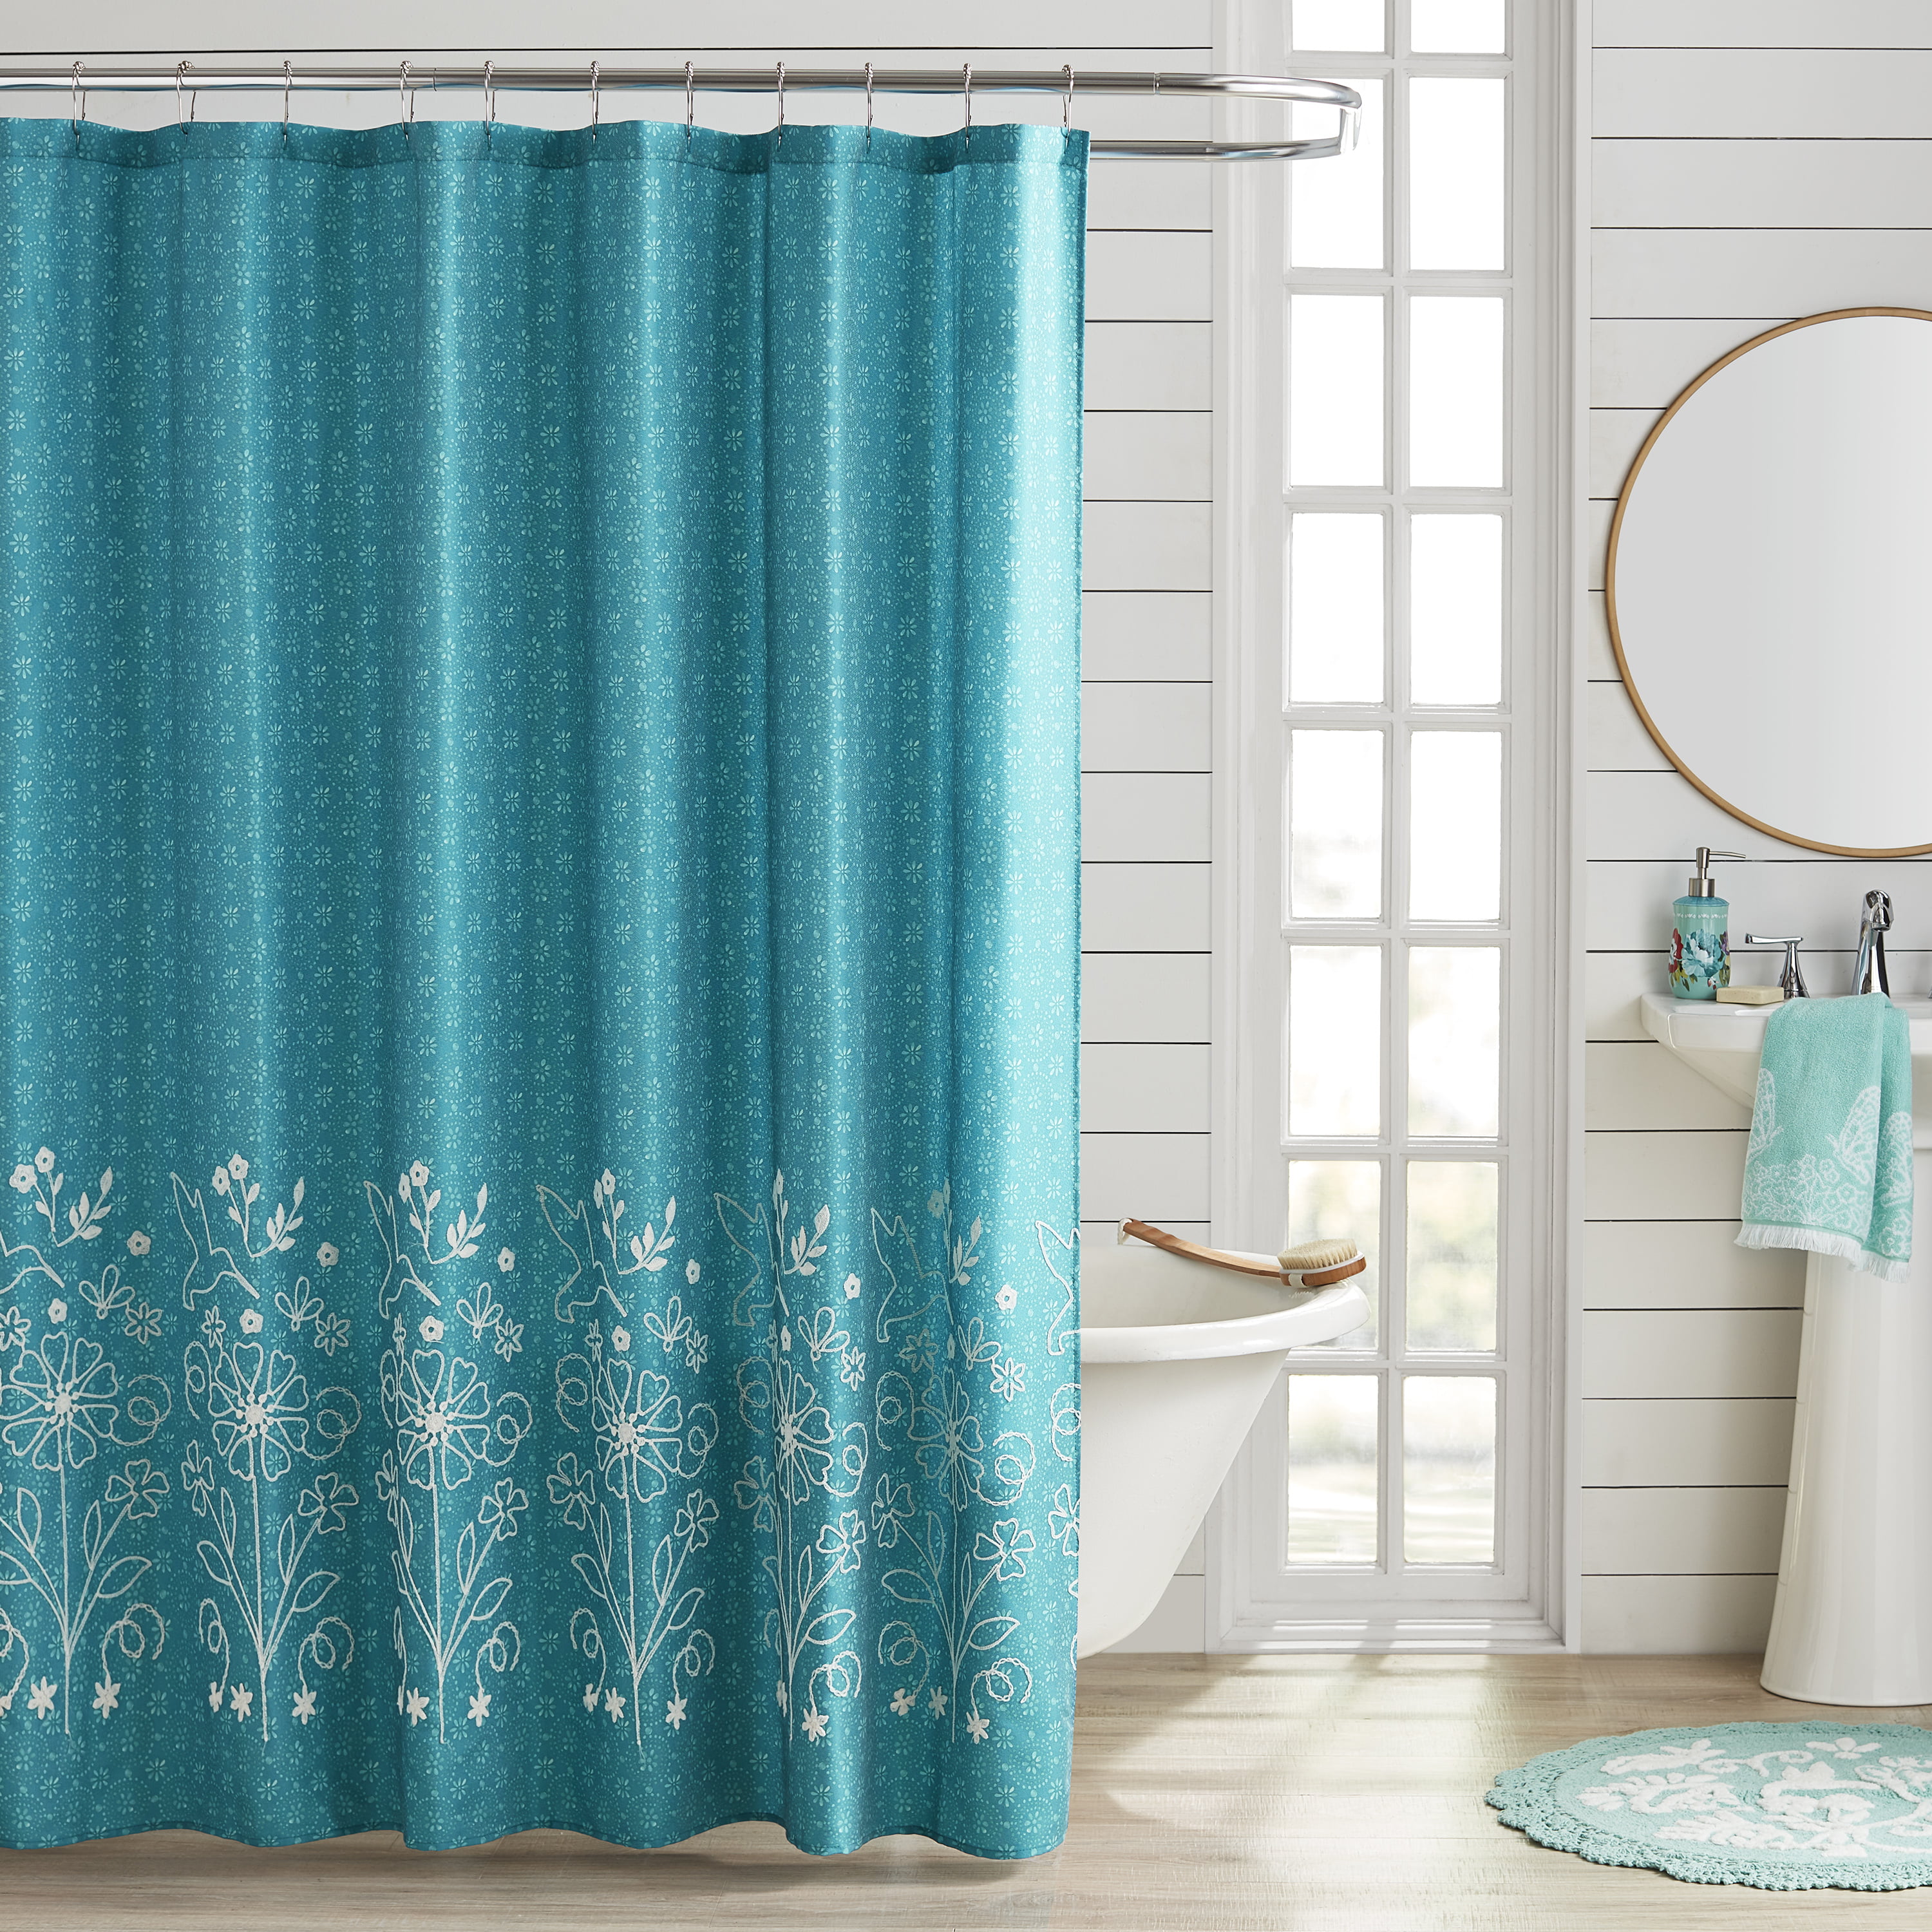 Rich Sea Waterproof Bathroom Polyester Shower Curtain Liner Water Resistant 